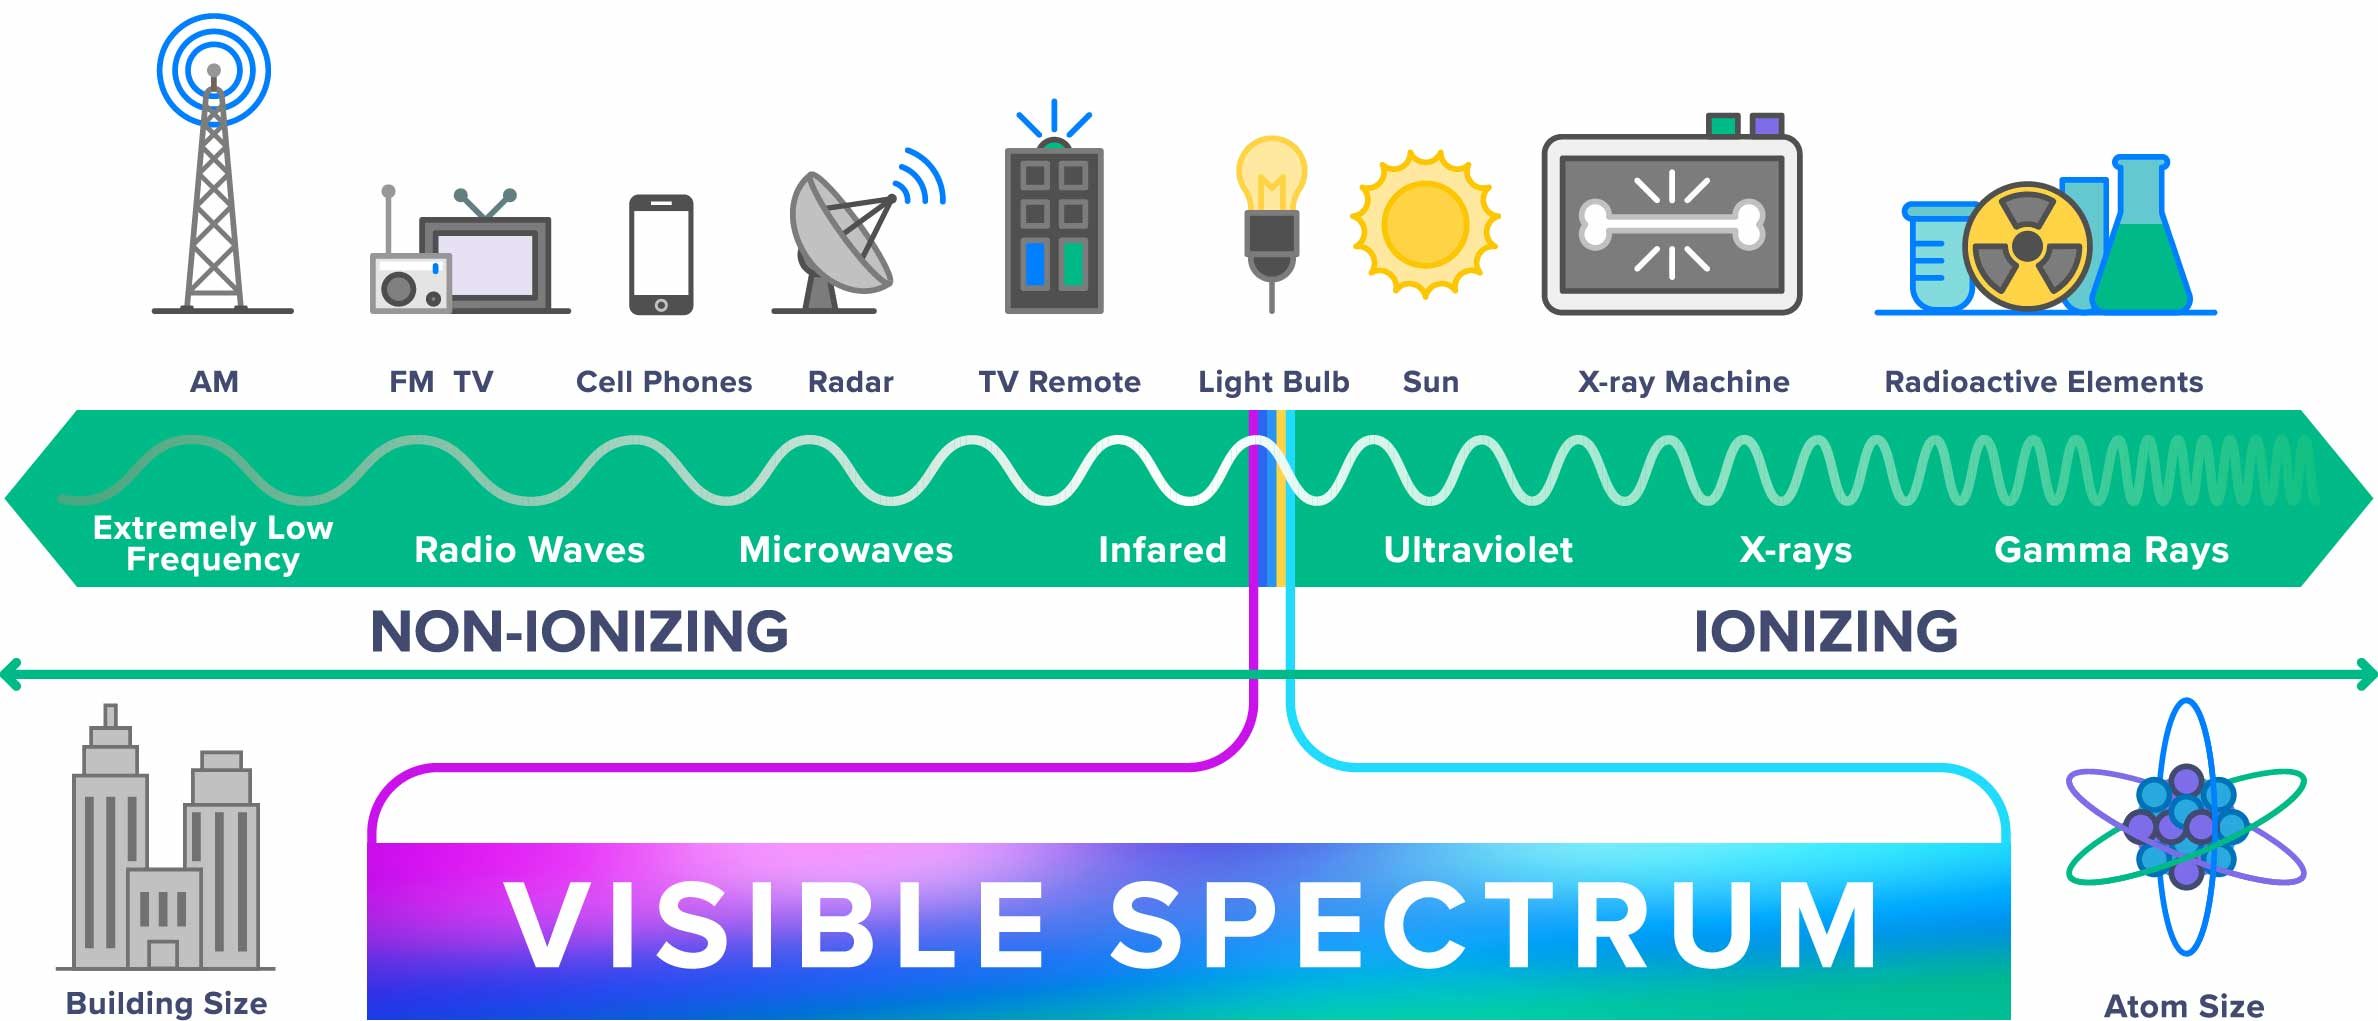 DefenderShield Visible Spectrum Infographic